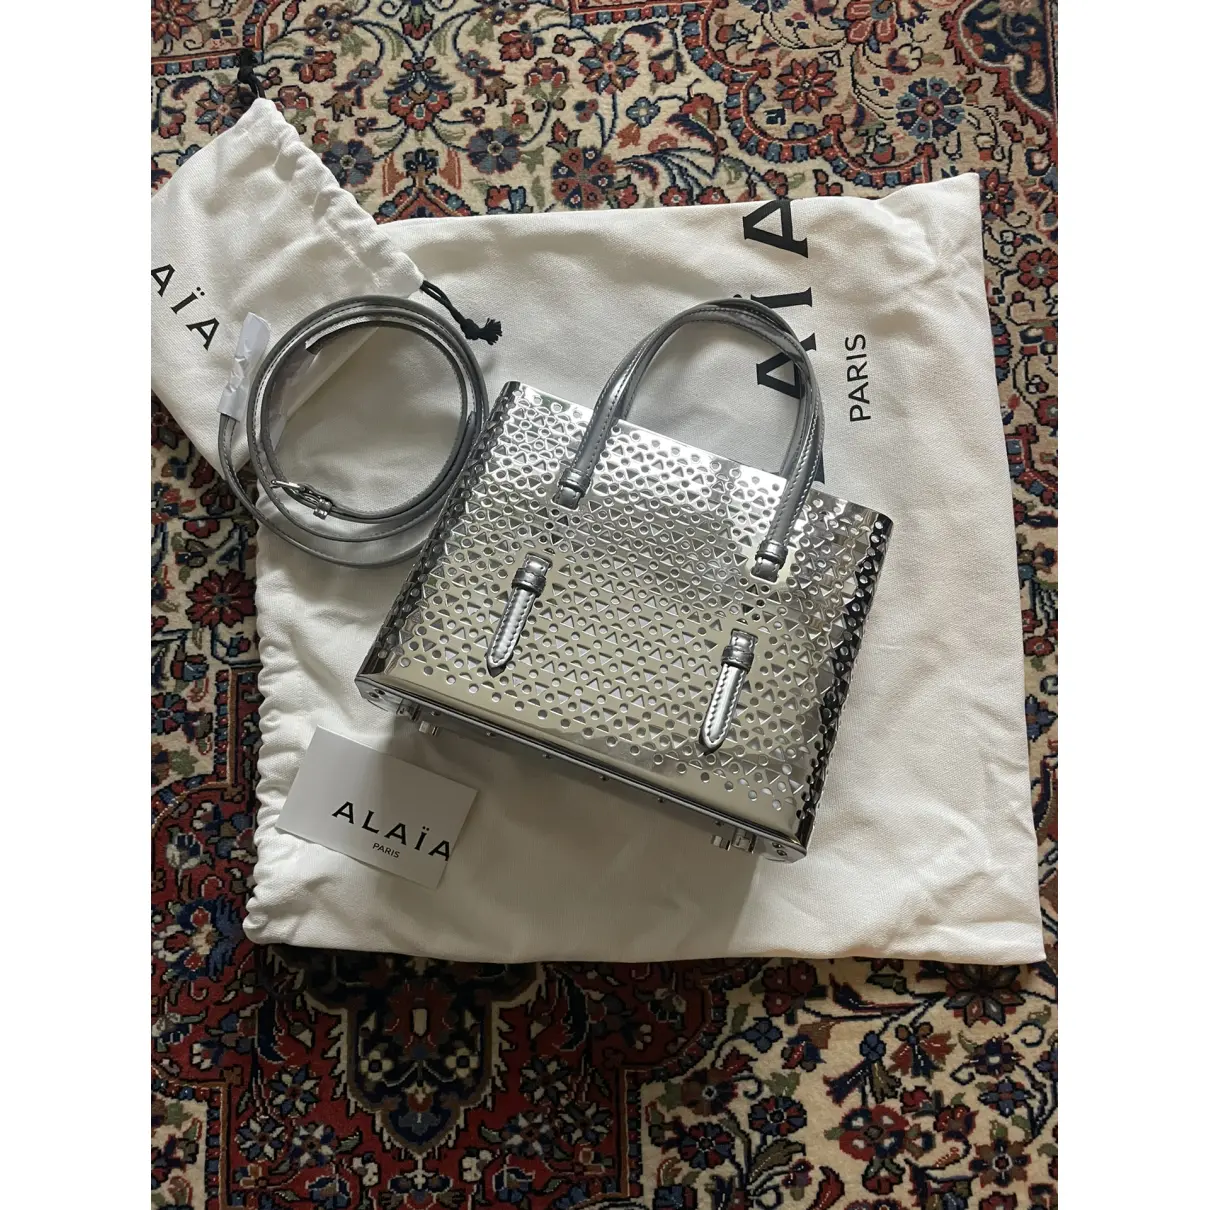 Buy Alaïa Mina crossbody bag online